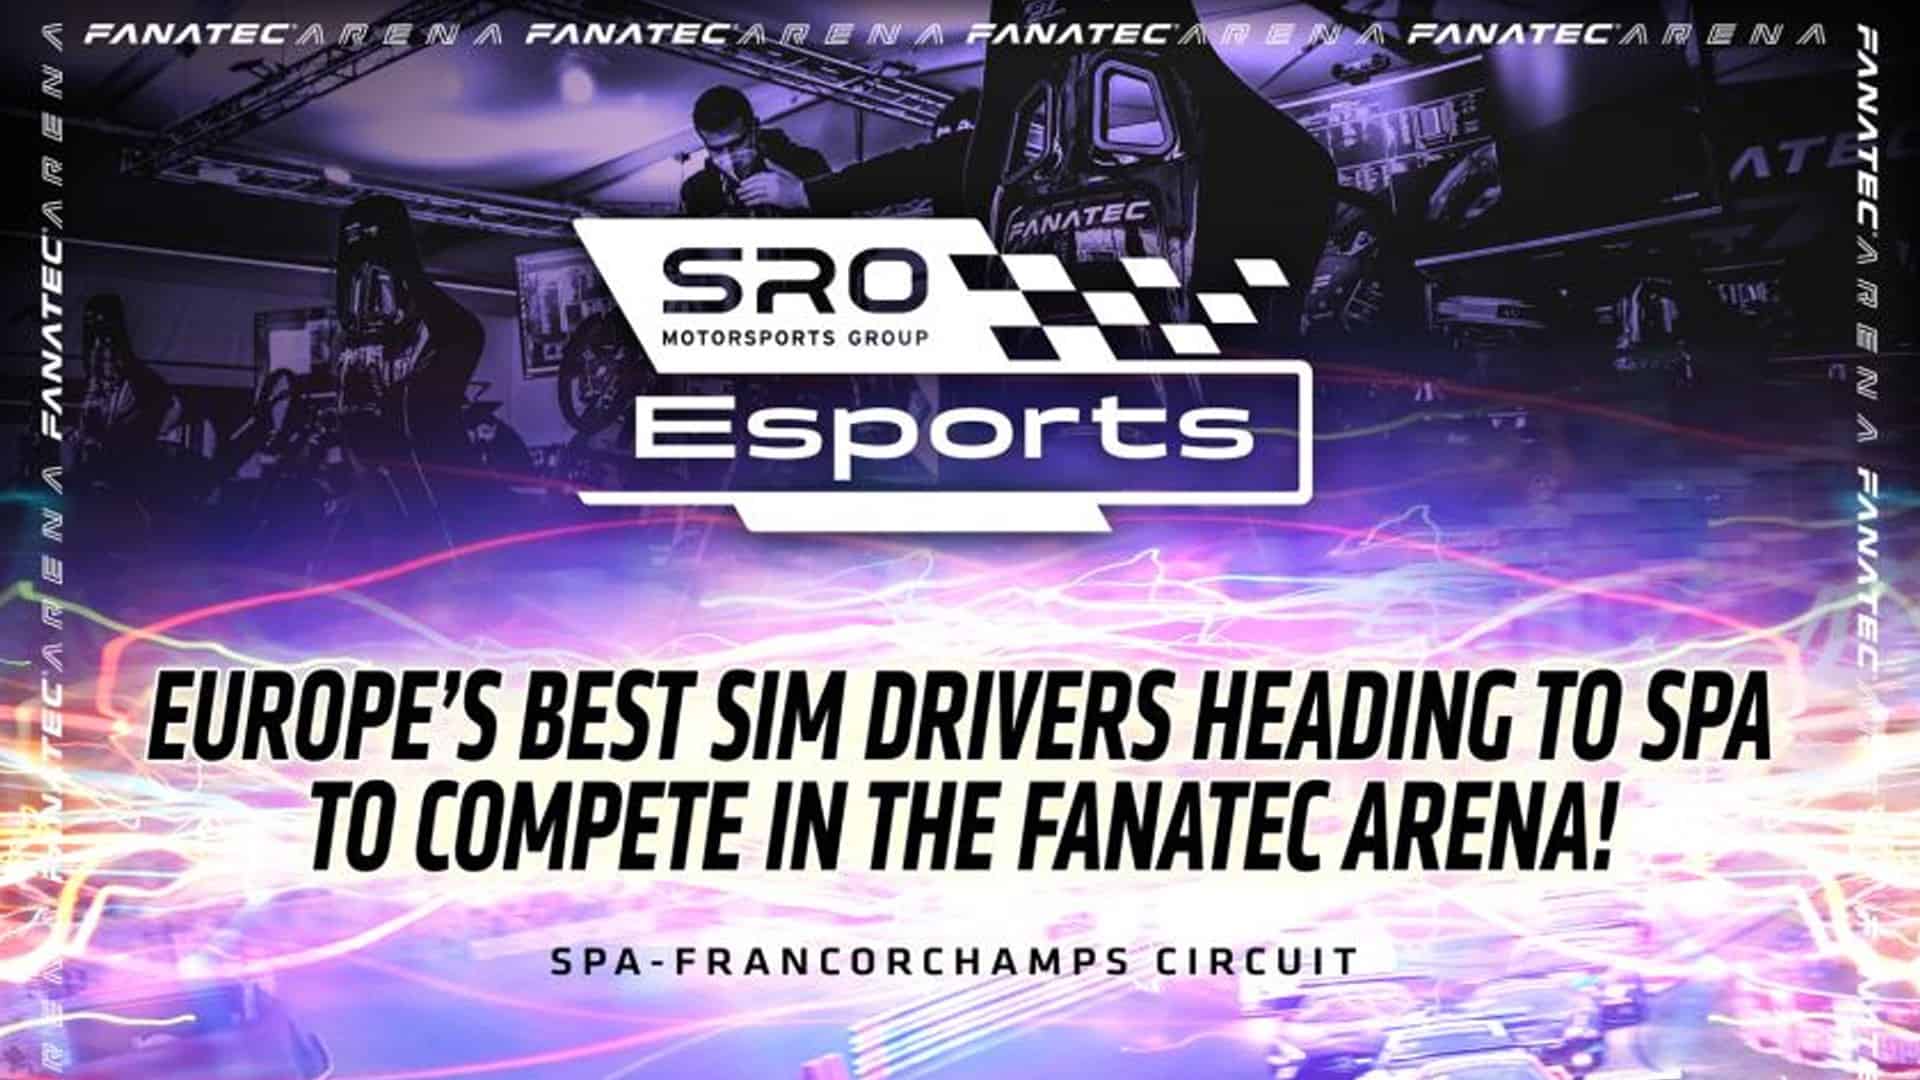 SRO Esports Racing Night will take place at Fanatec Esports Arena during 2022 Spa 24